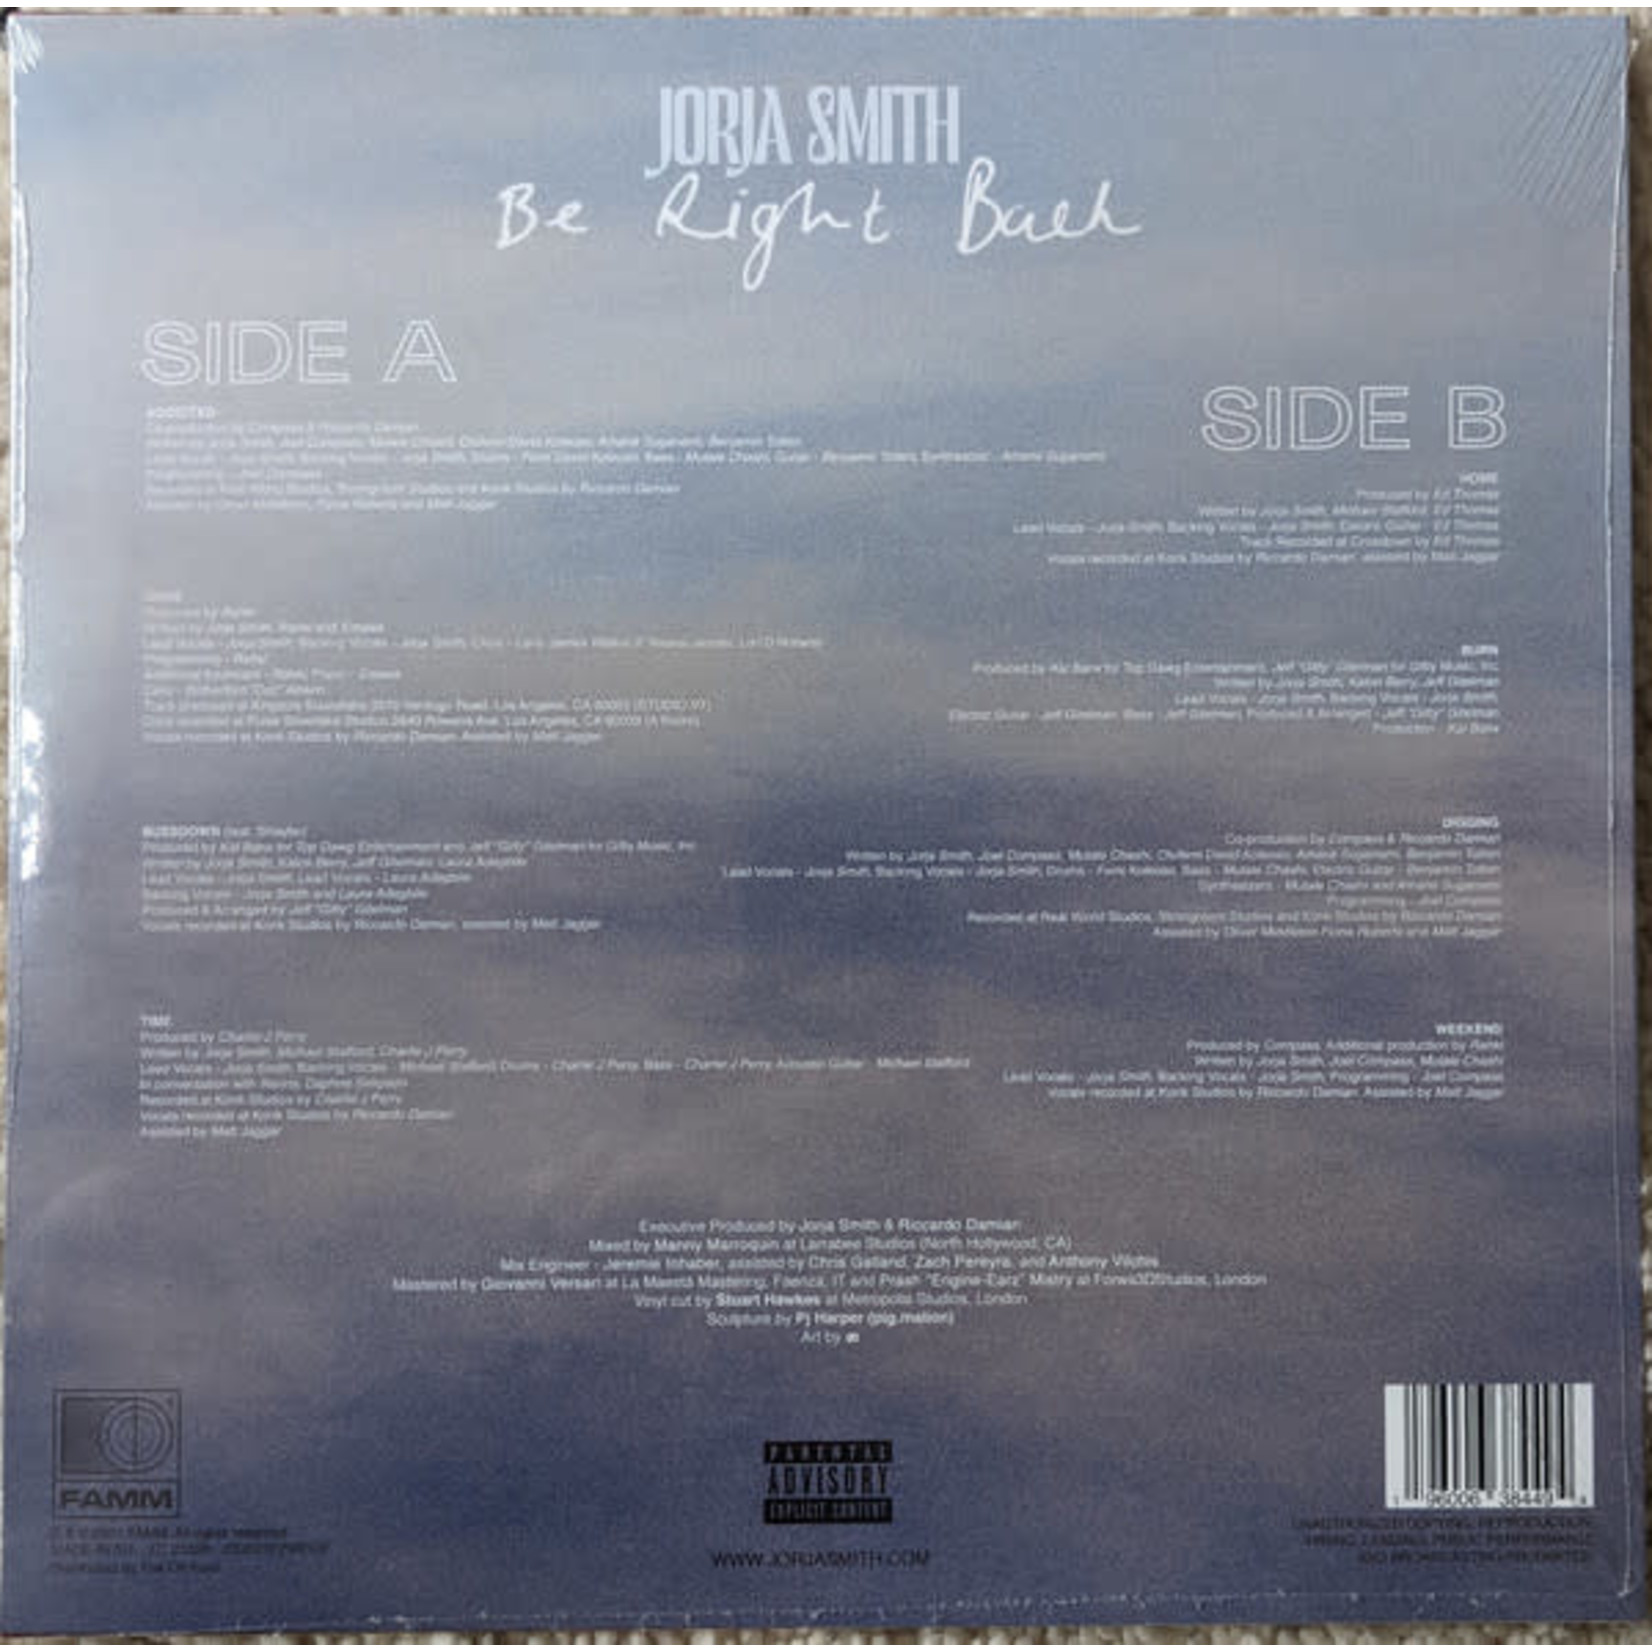 JORJA SMITH BE RIGHT BACK  12"  45 RPM  RED VINYL EP